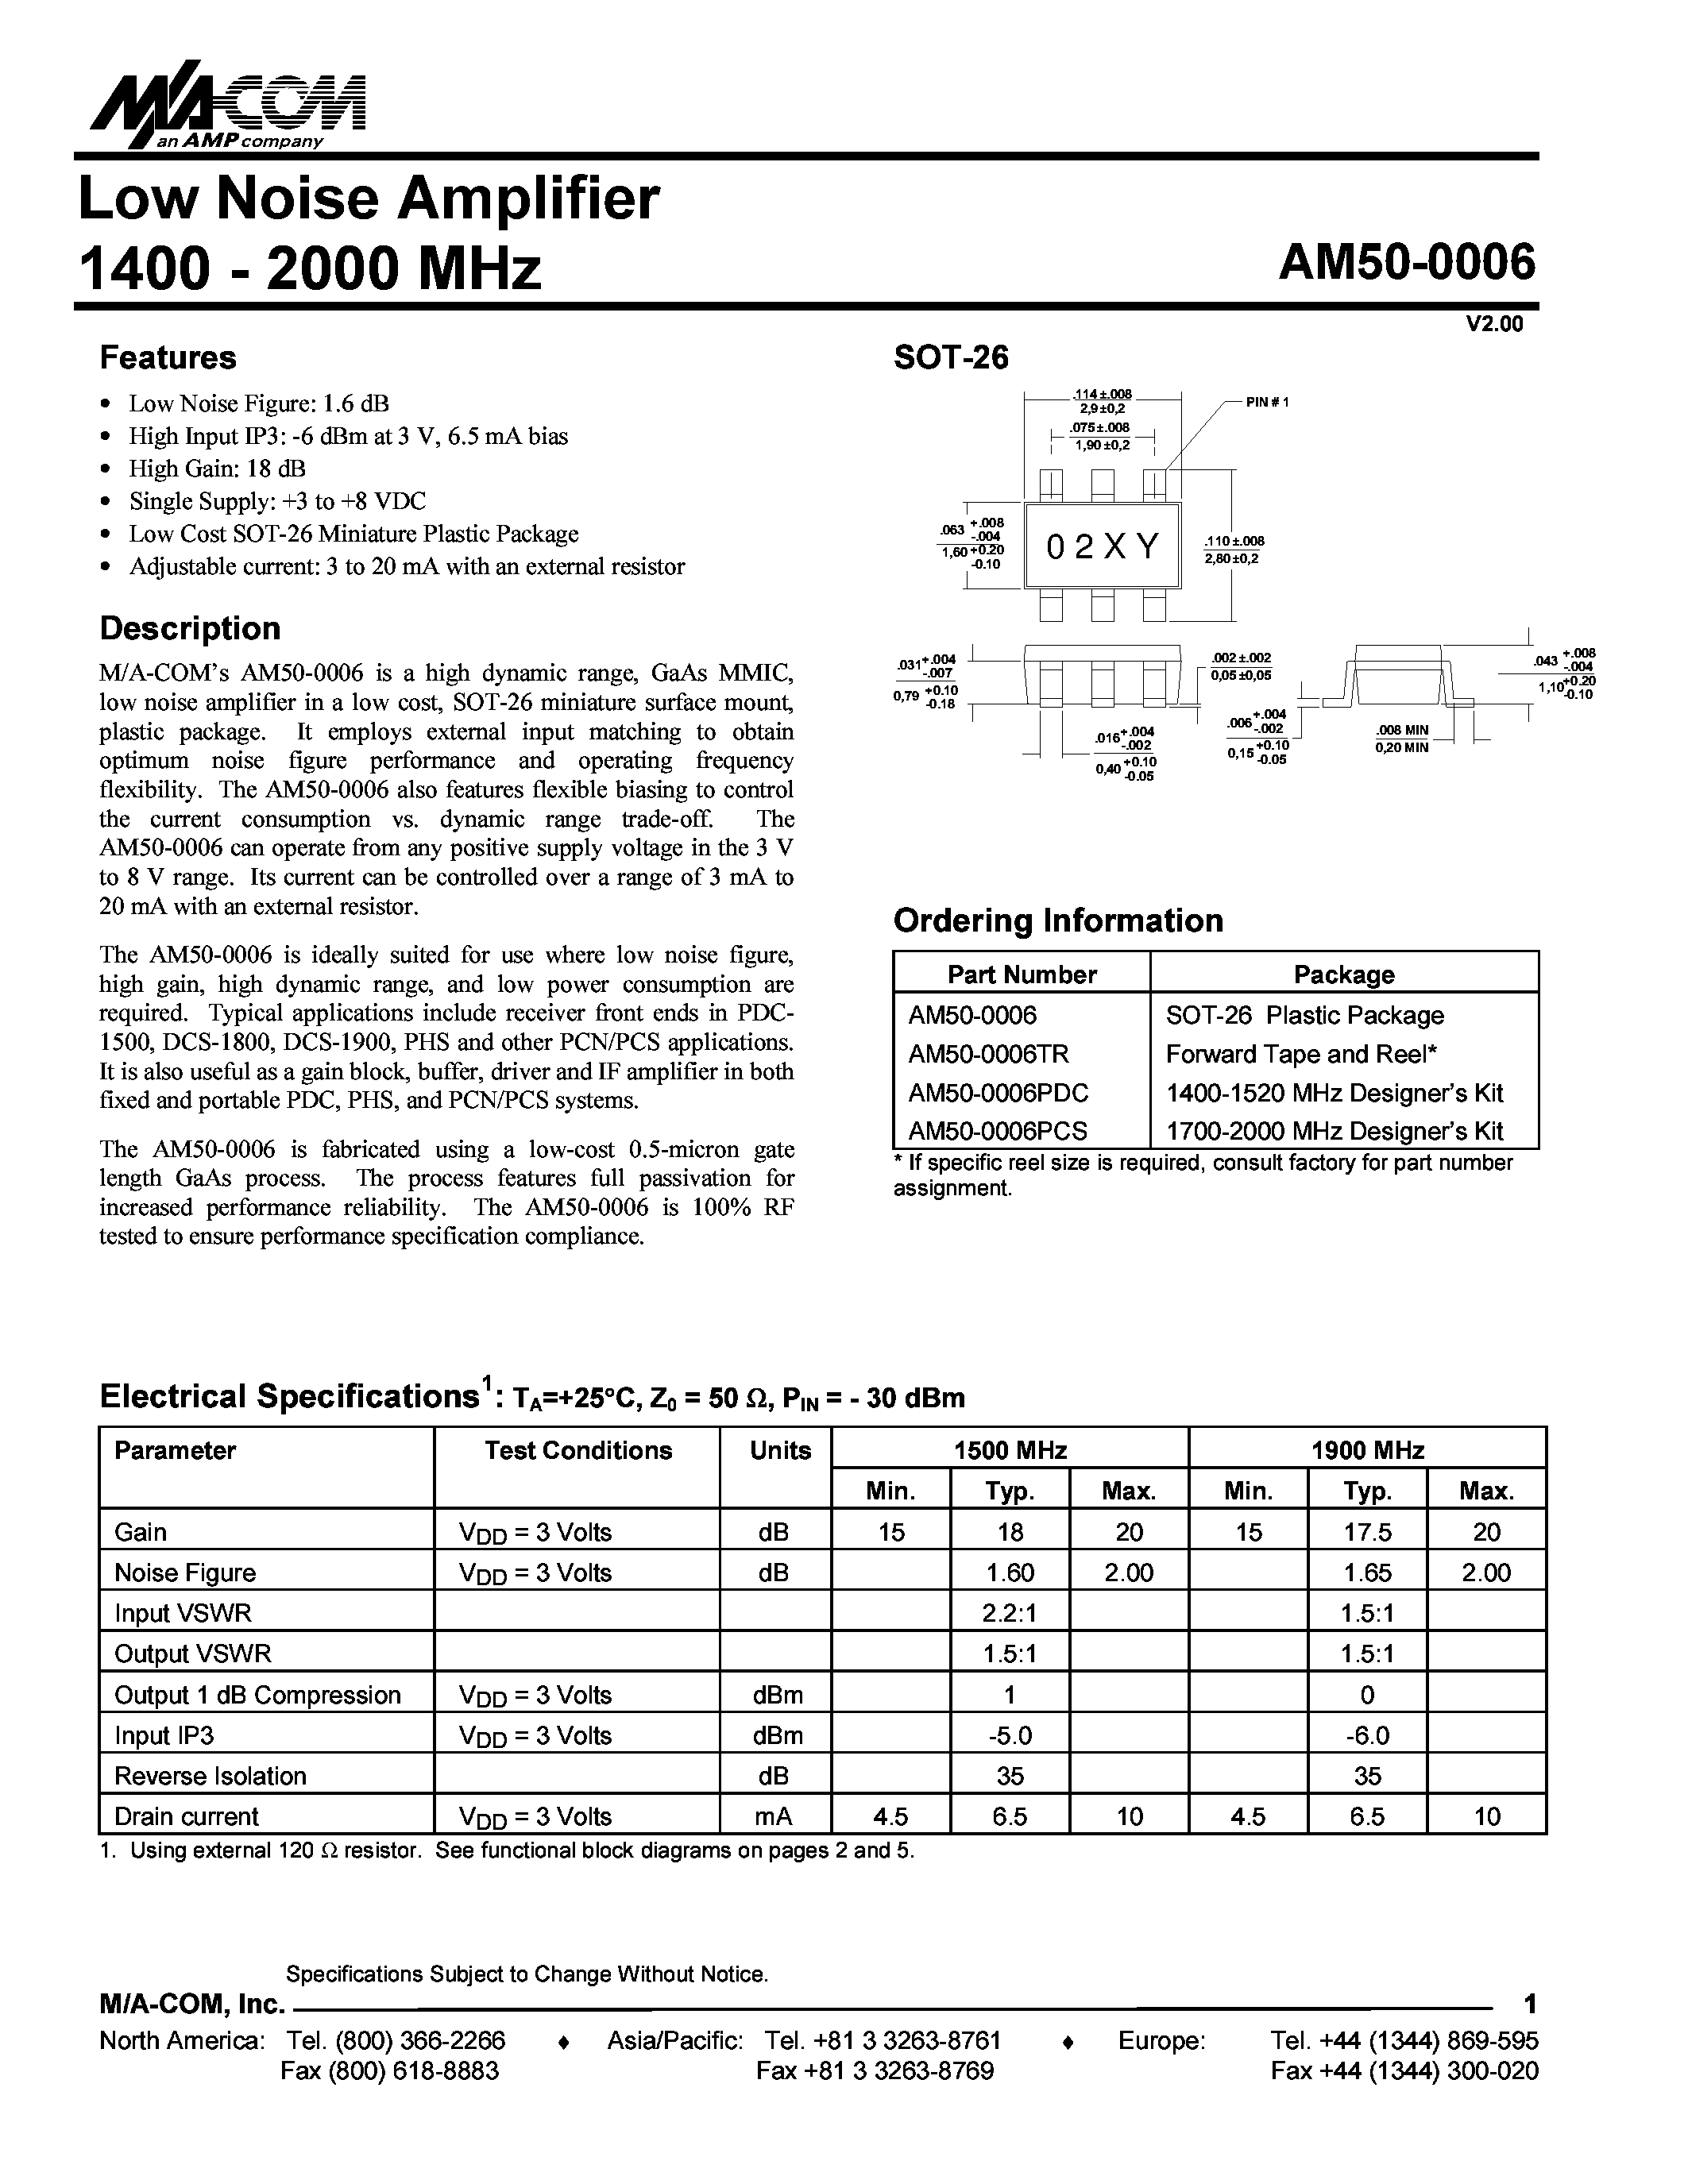 Даташит AM50-0006 - Low Noise Amplifier 1400 - 2000 MHz страница 1